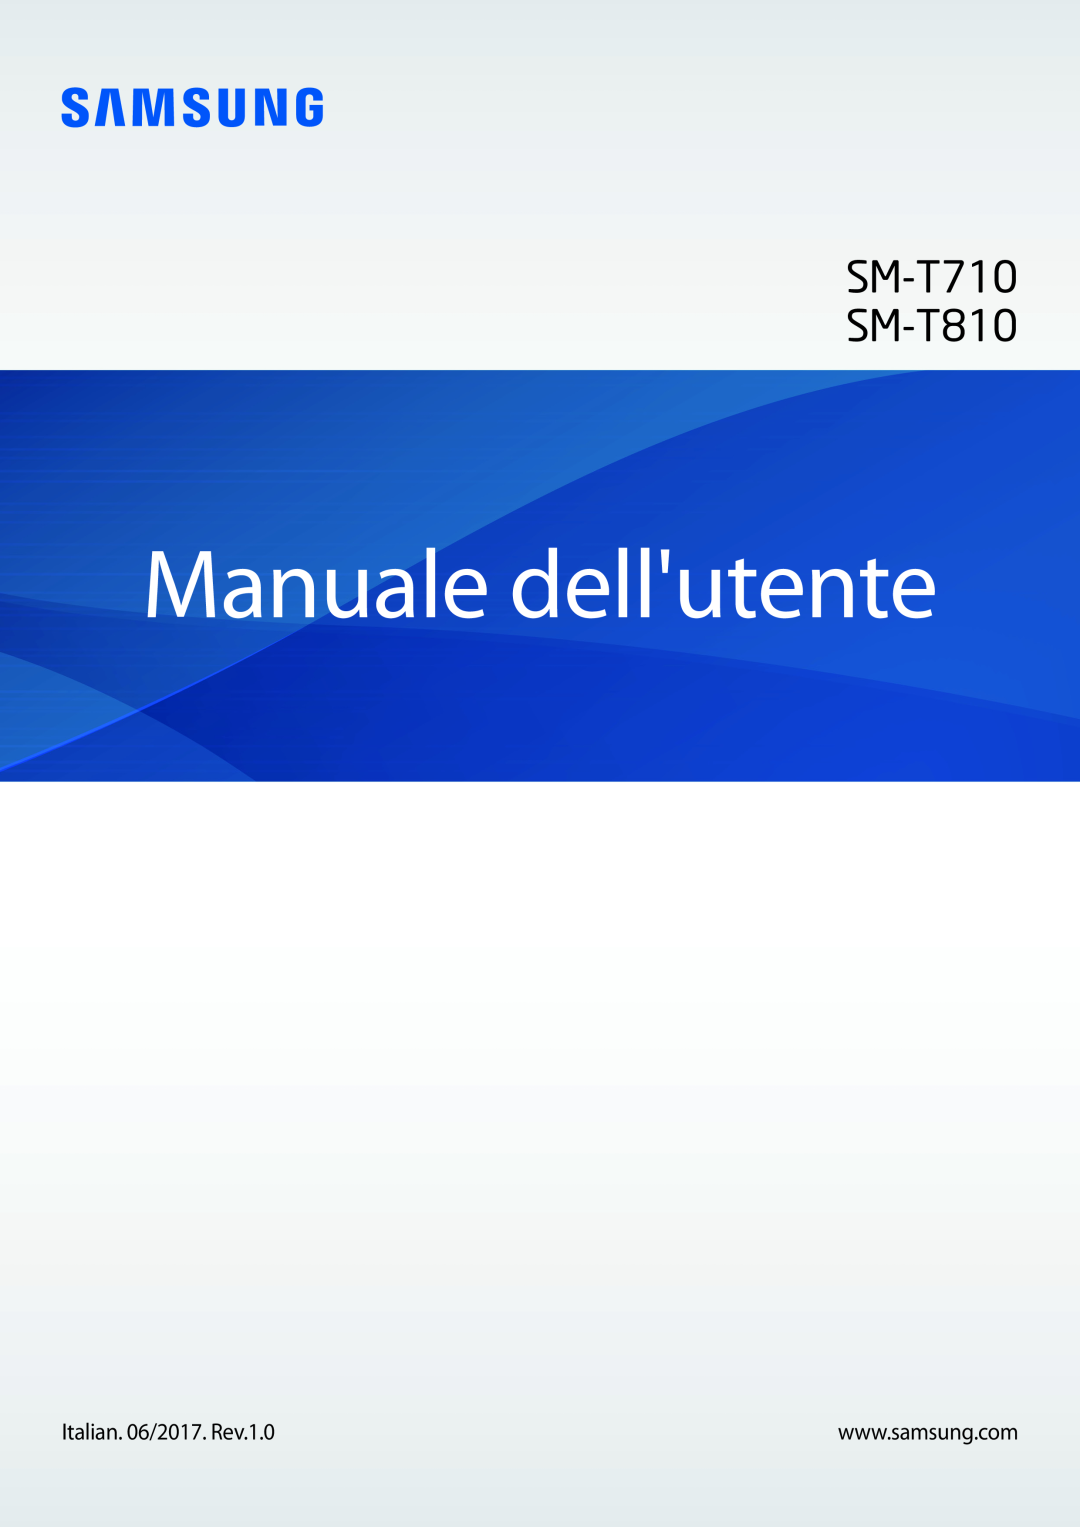 Samsung SM-T810NZKEPHN, SM-T810NZWEPHN, SM-T810NZDETUR, SM-T810NZDEPHN manual Manuale dellutente, SM-T710 SM-T810 